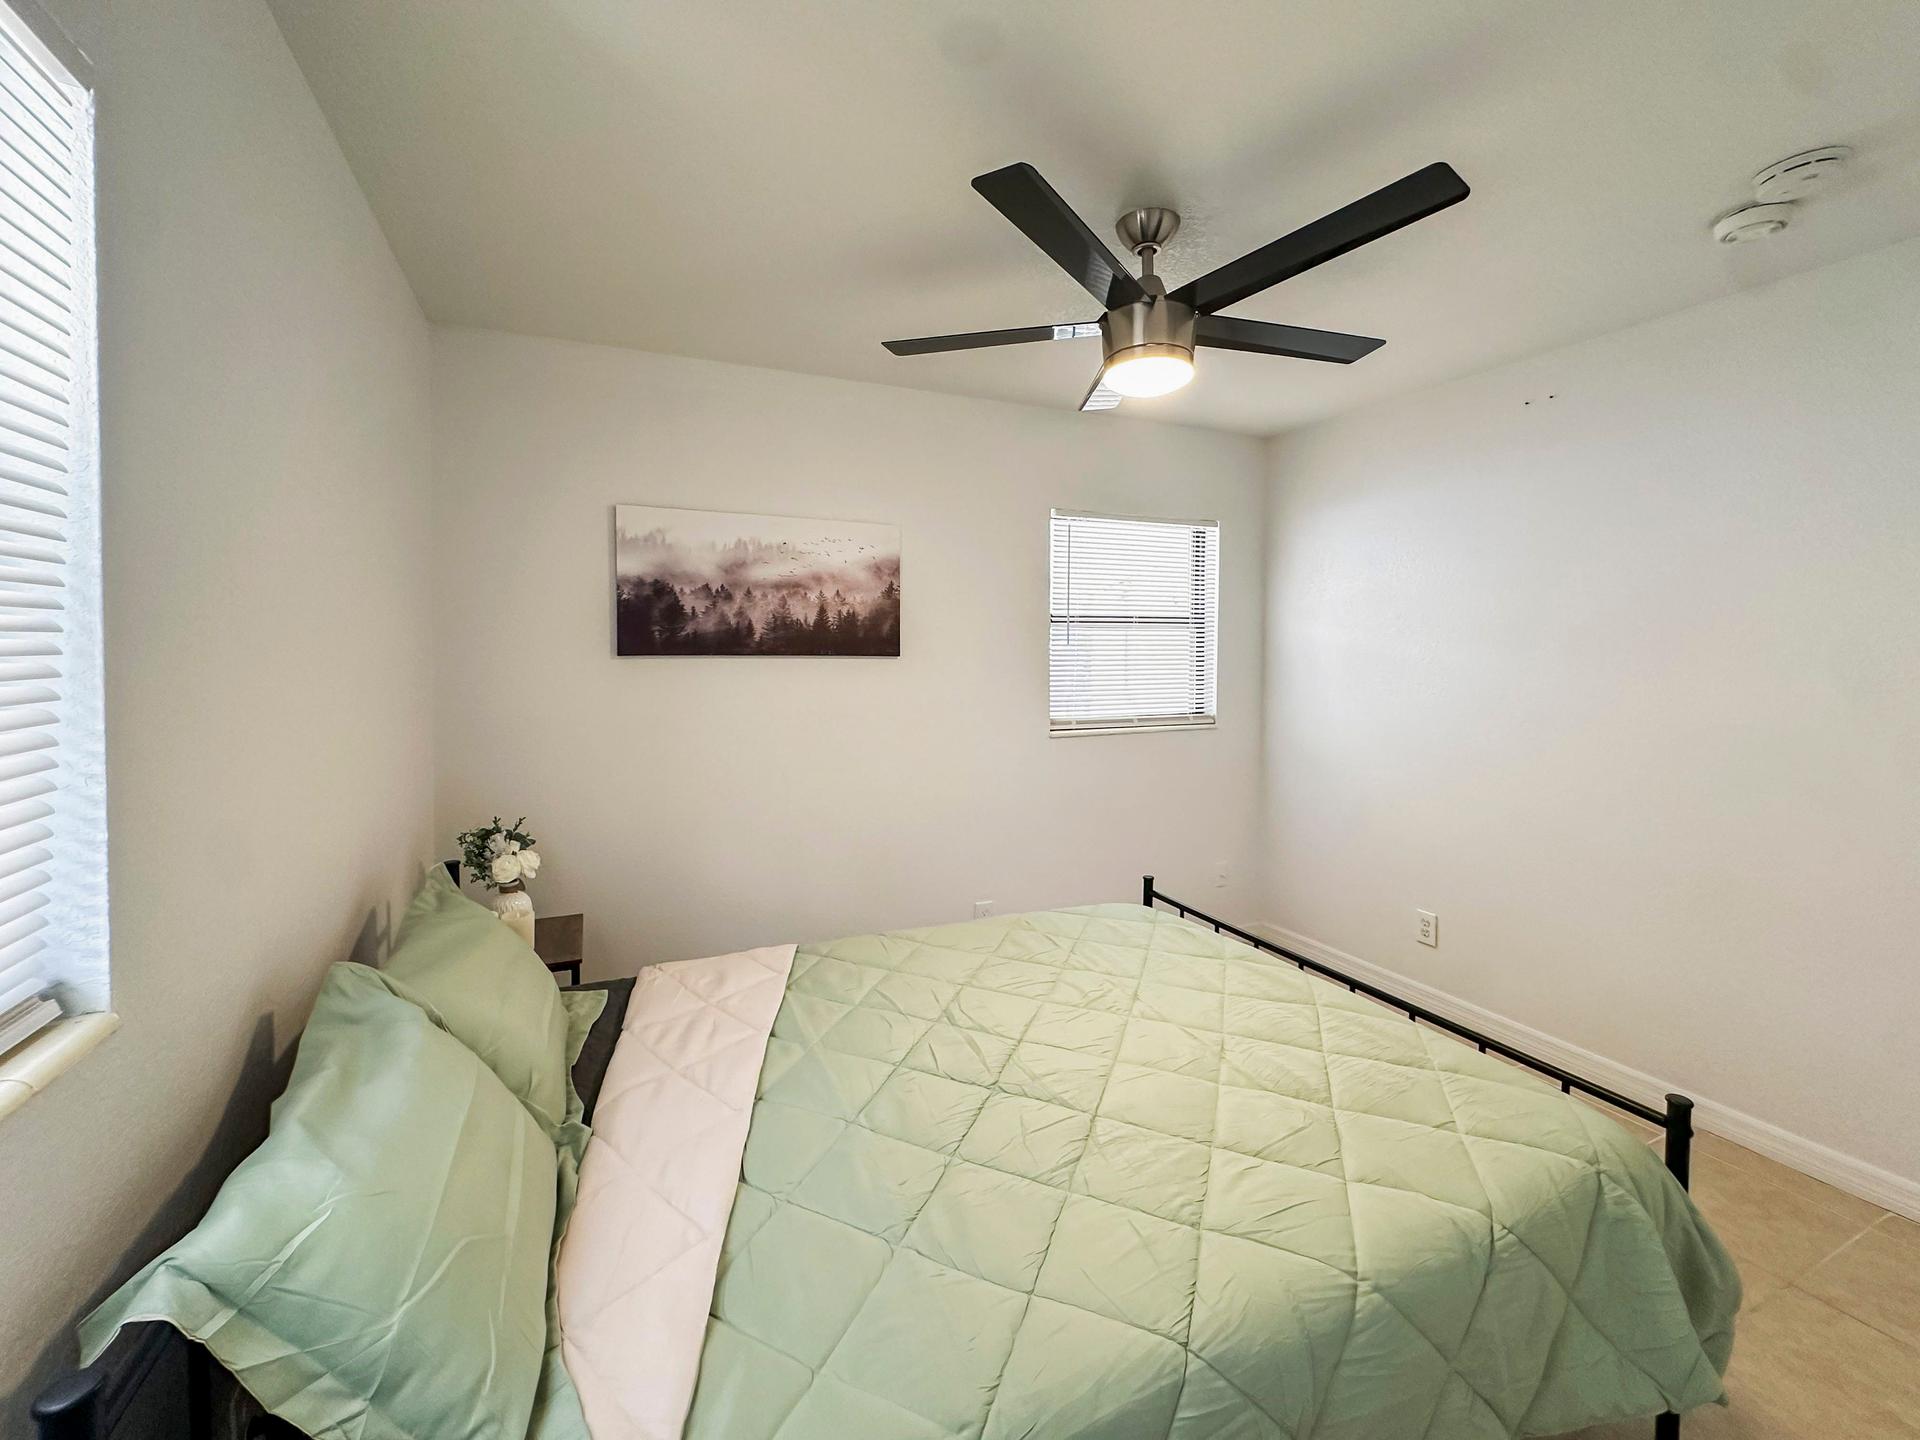 bedroom, detected:window blind, ceiling fan